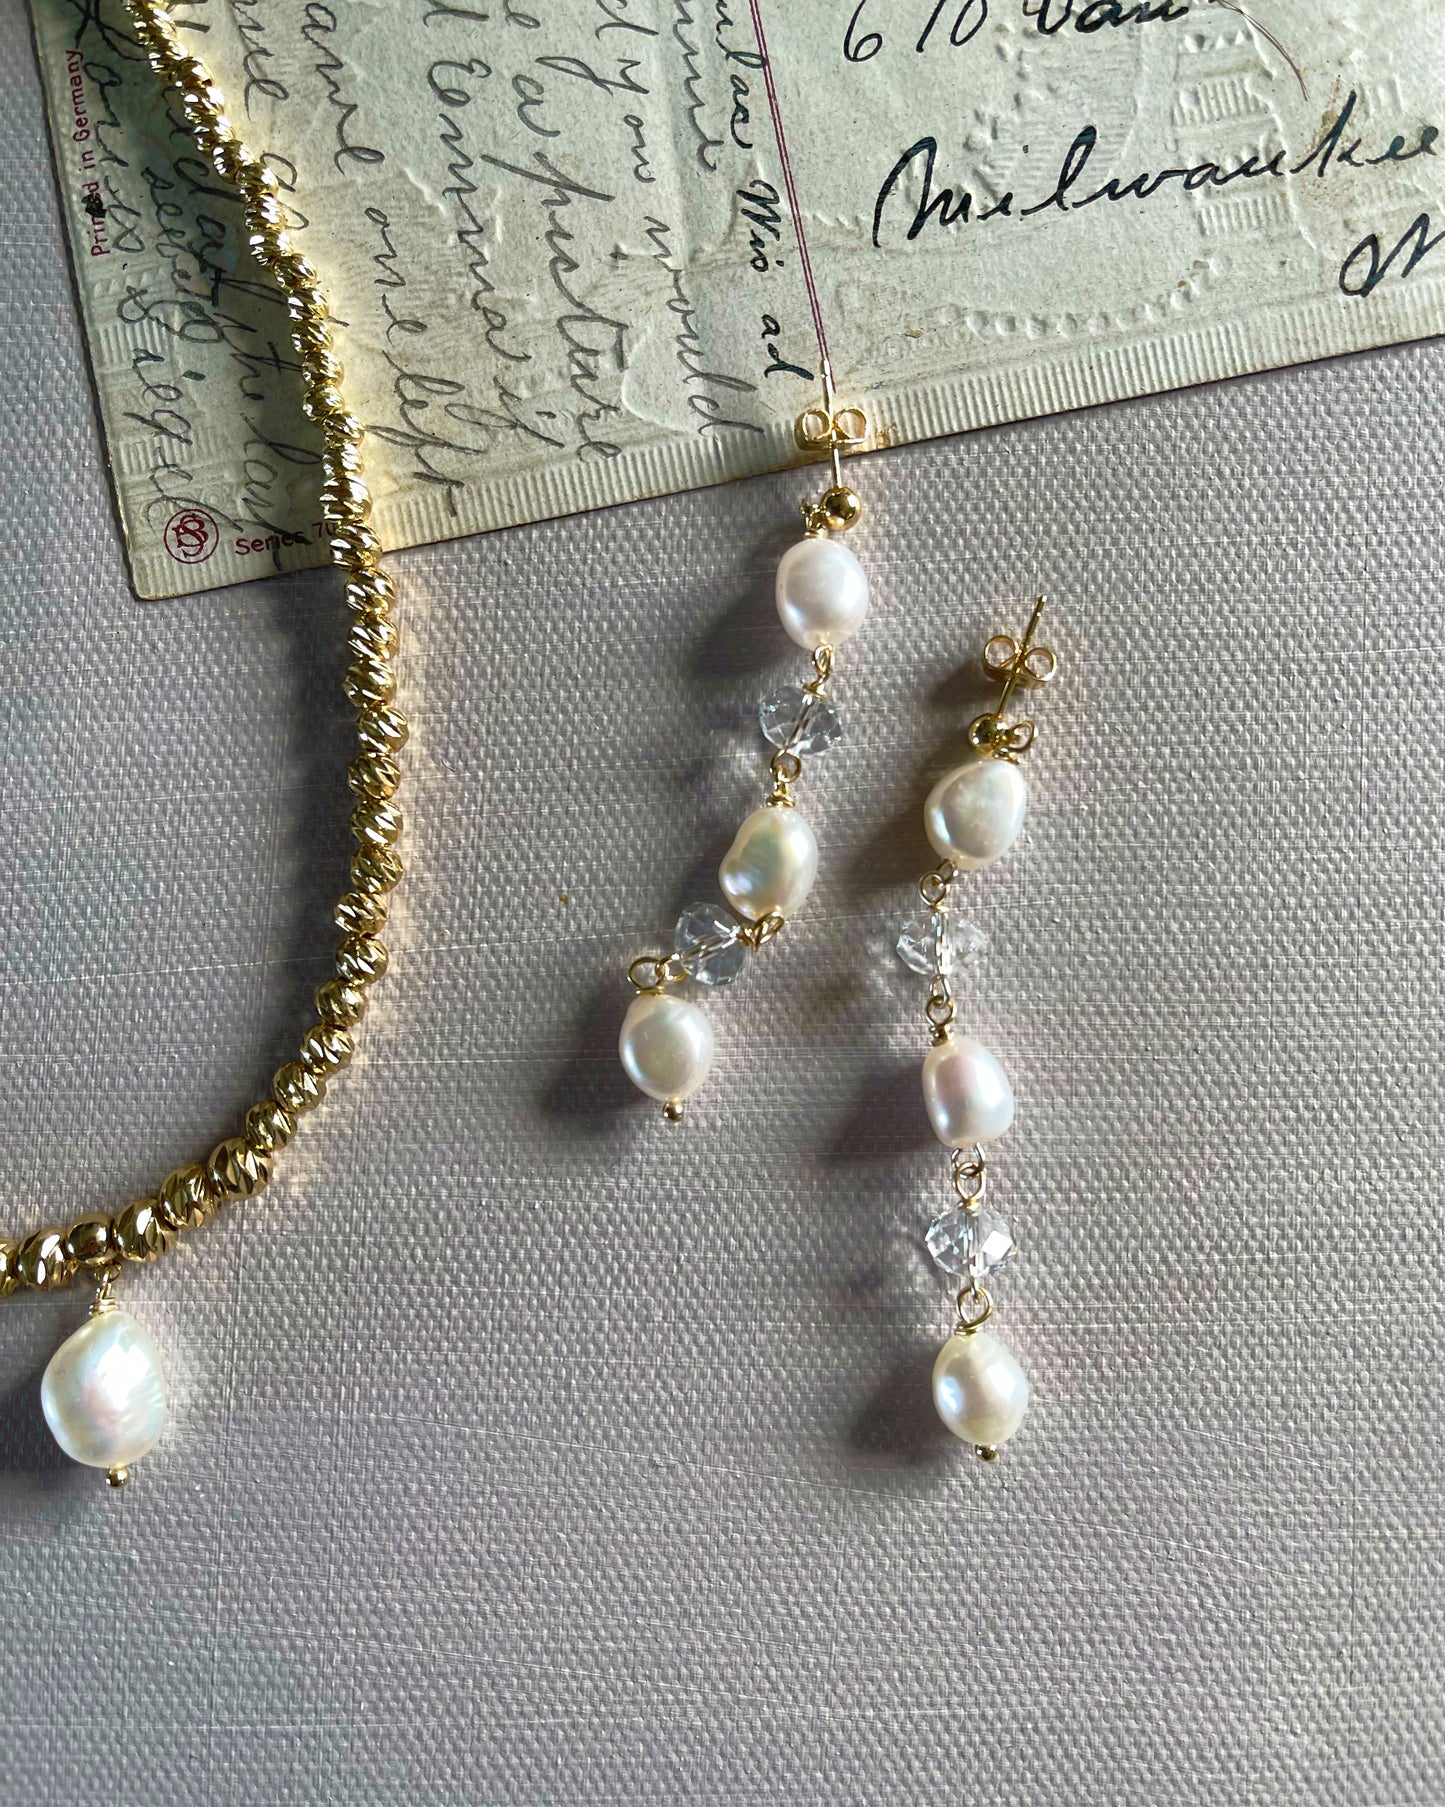 The chandelier earrings in white freshwater pearls